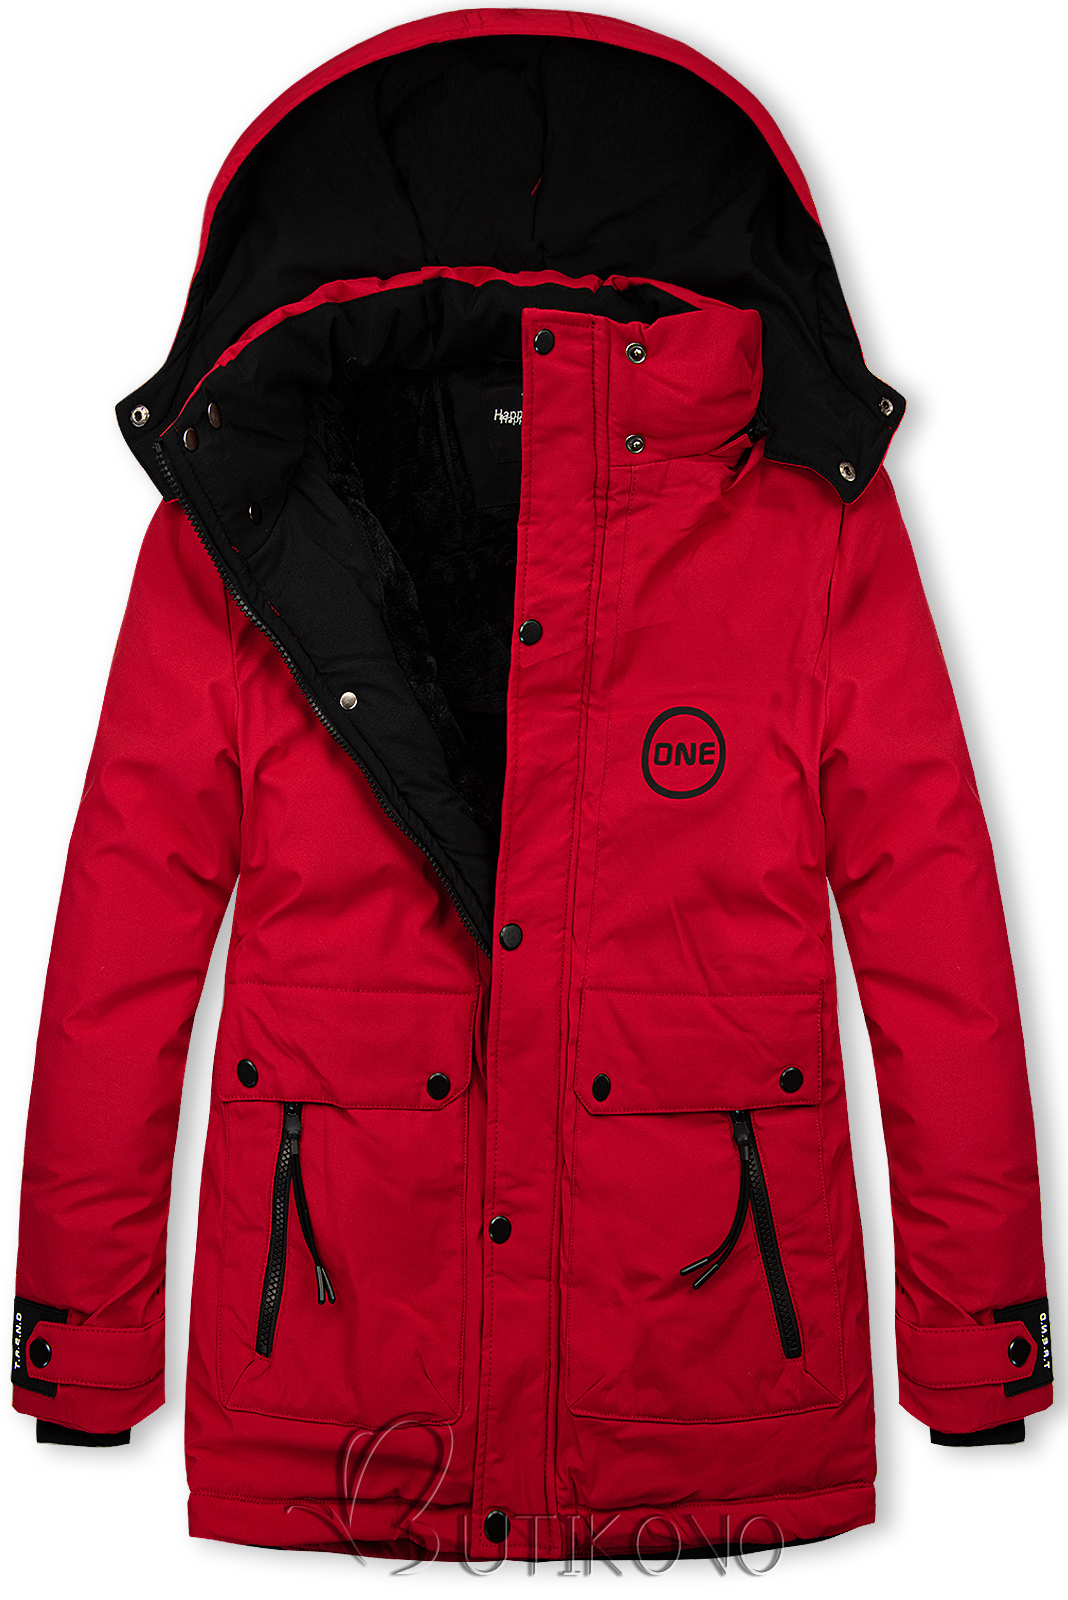 Chlapčenská zimná bunda červená/čierna